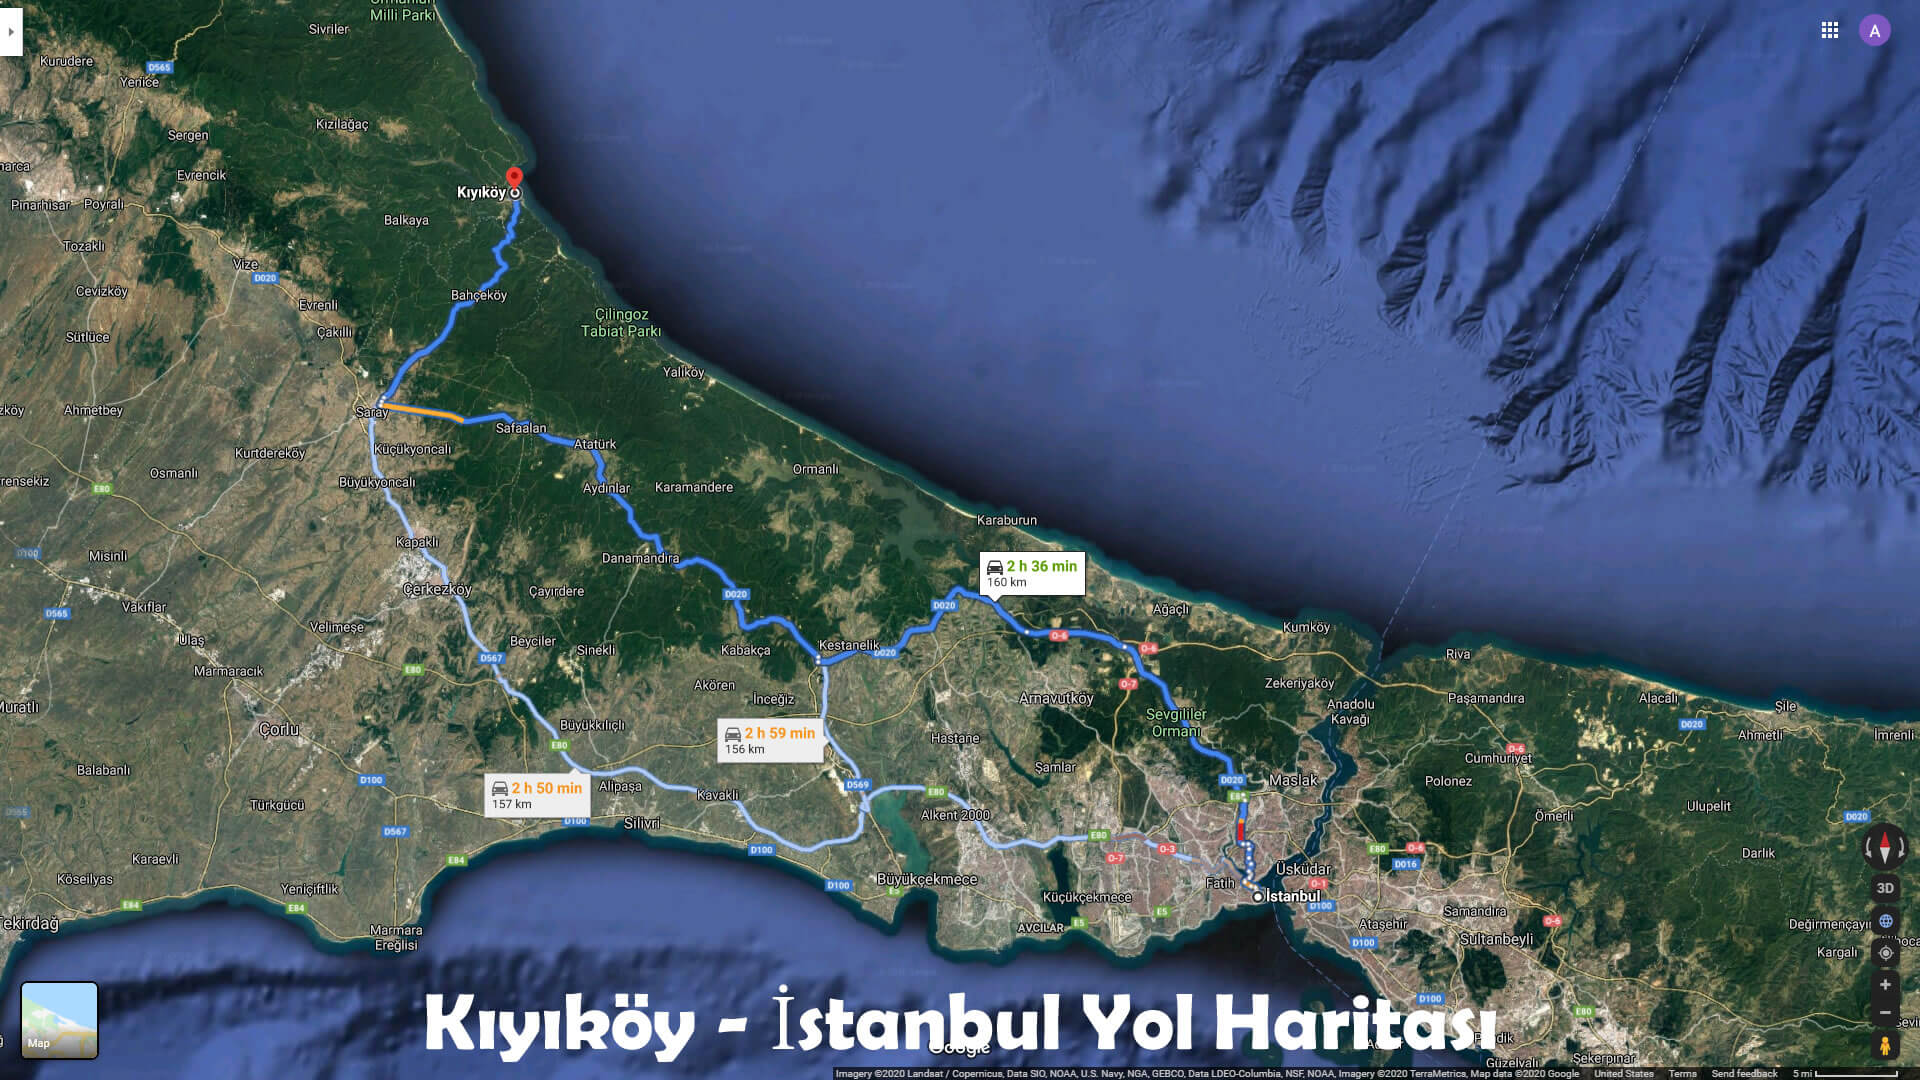 Kiyikoy - Istanbul Road Map